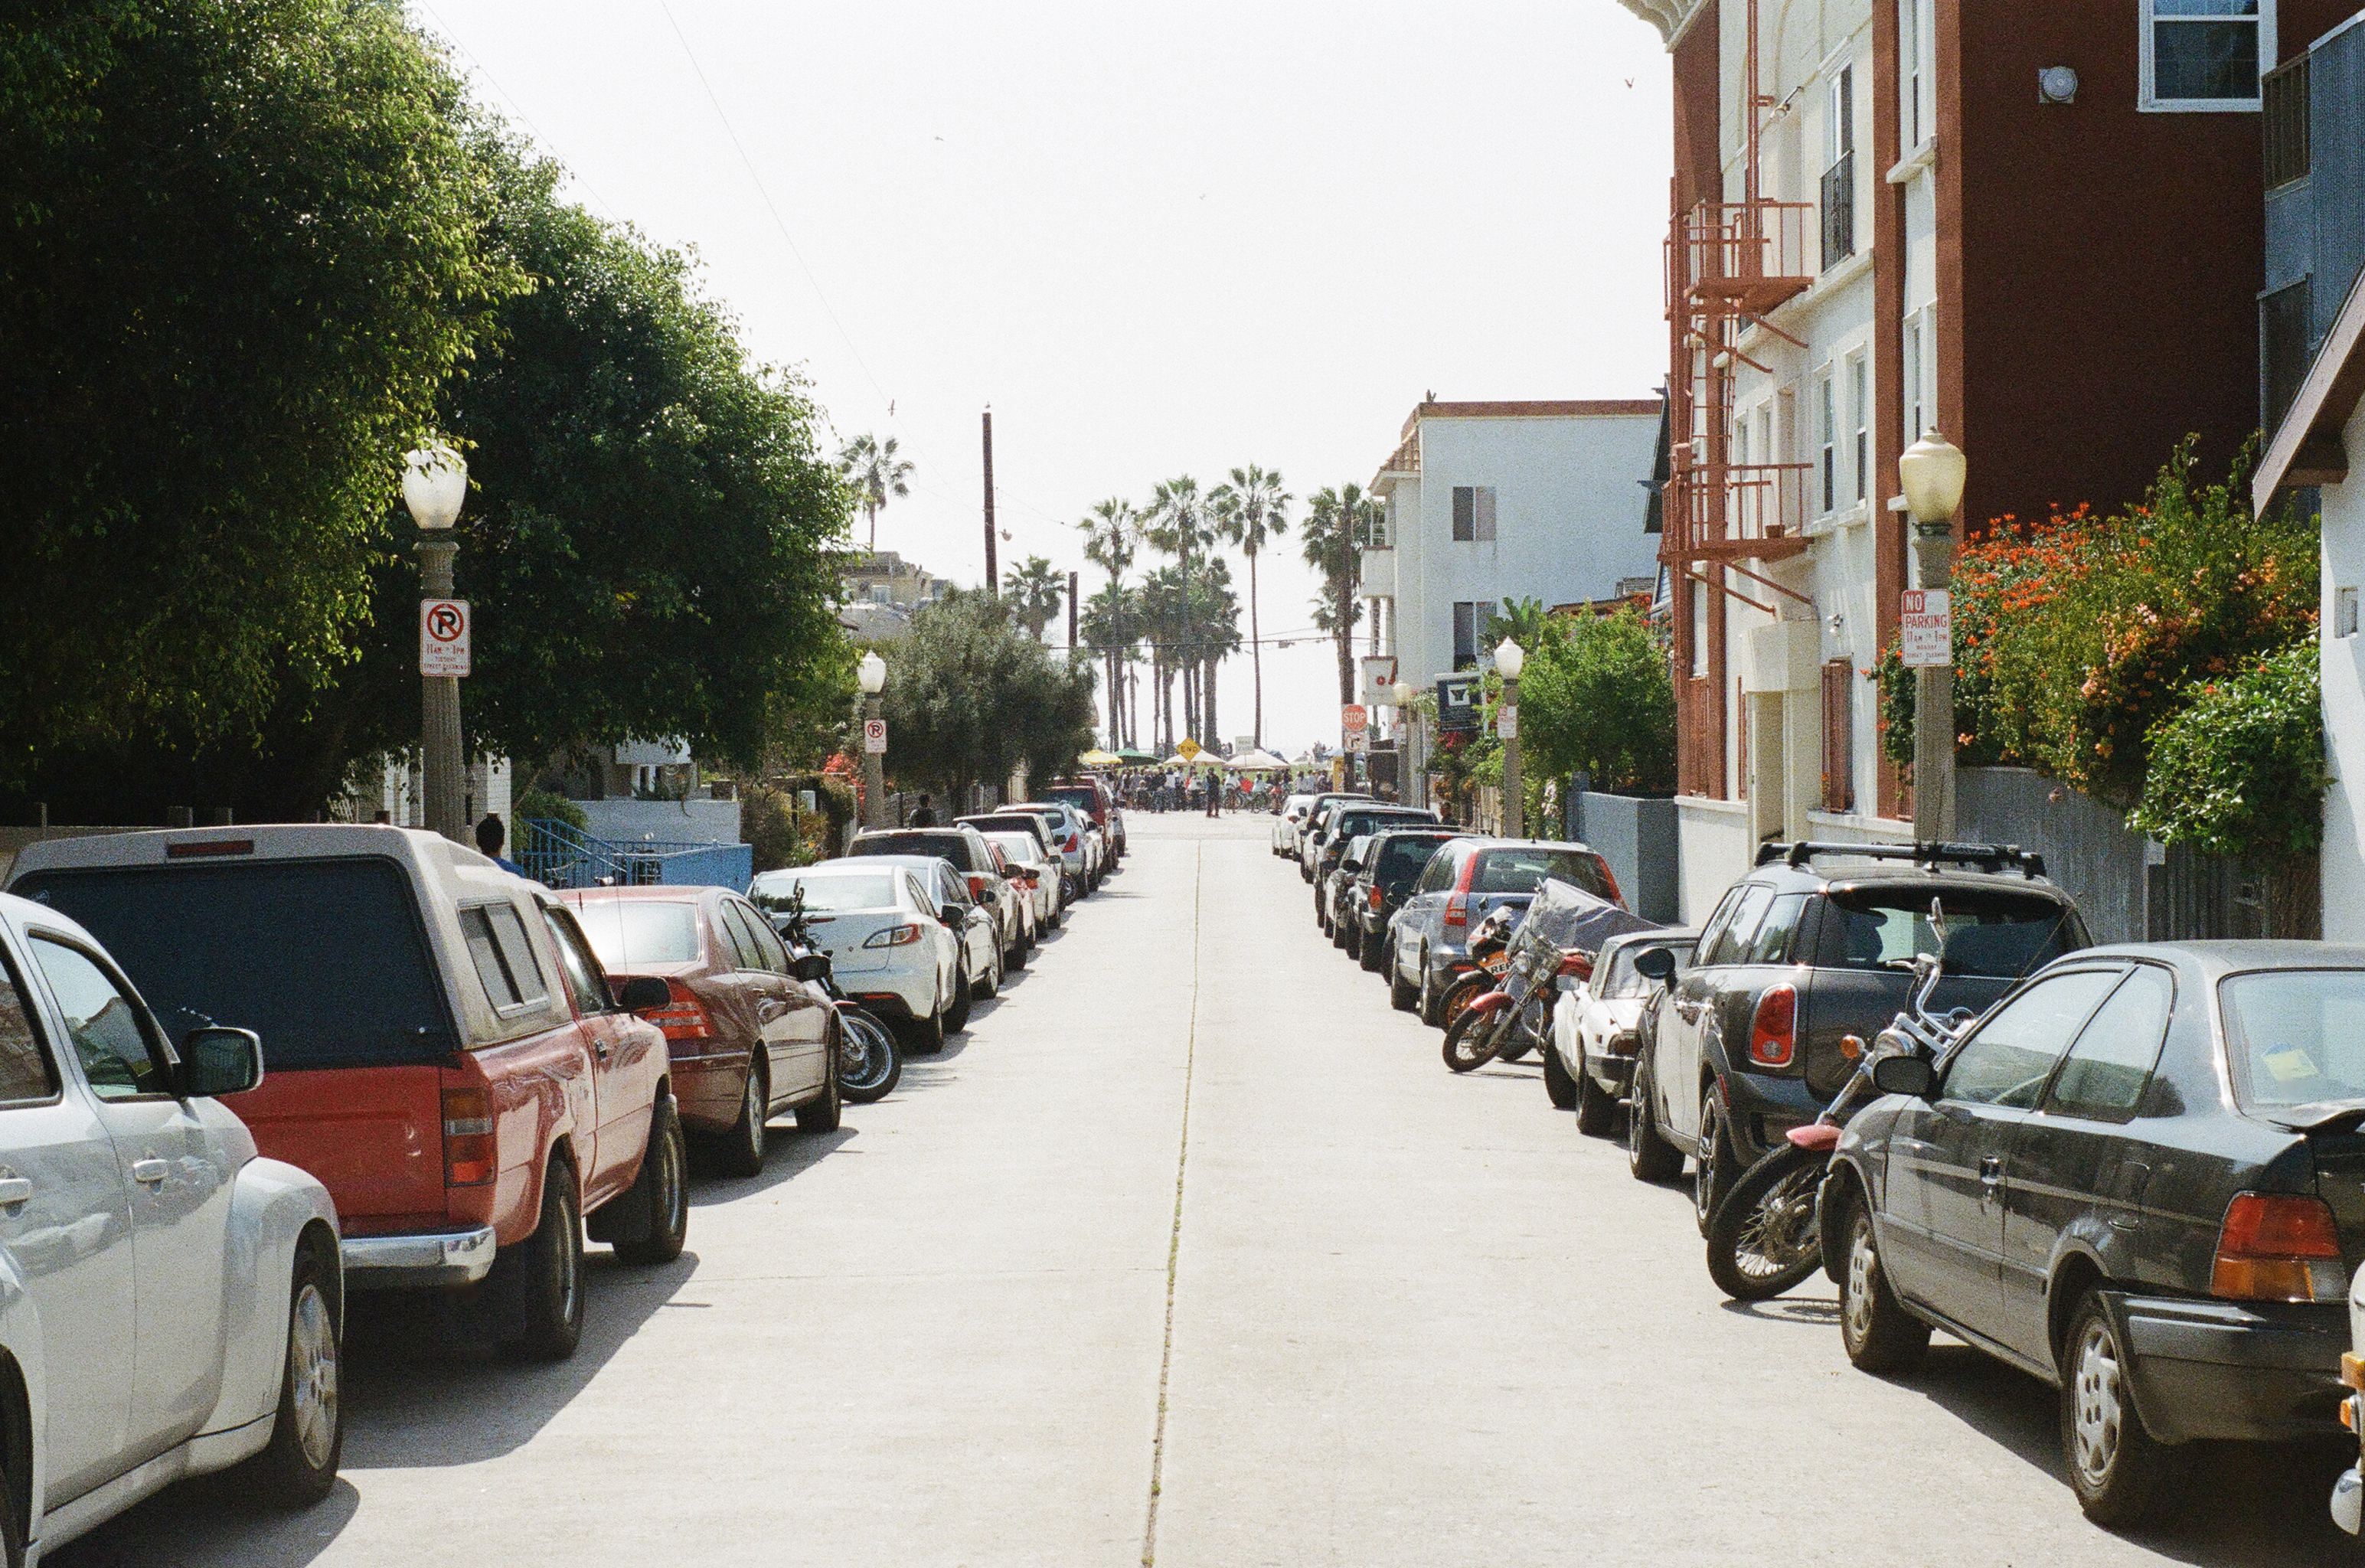 Cars vehicles street parking